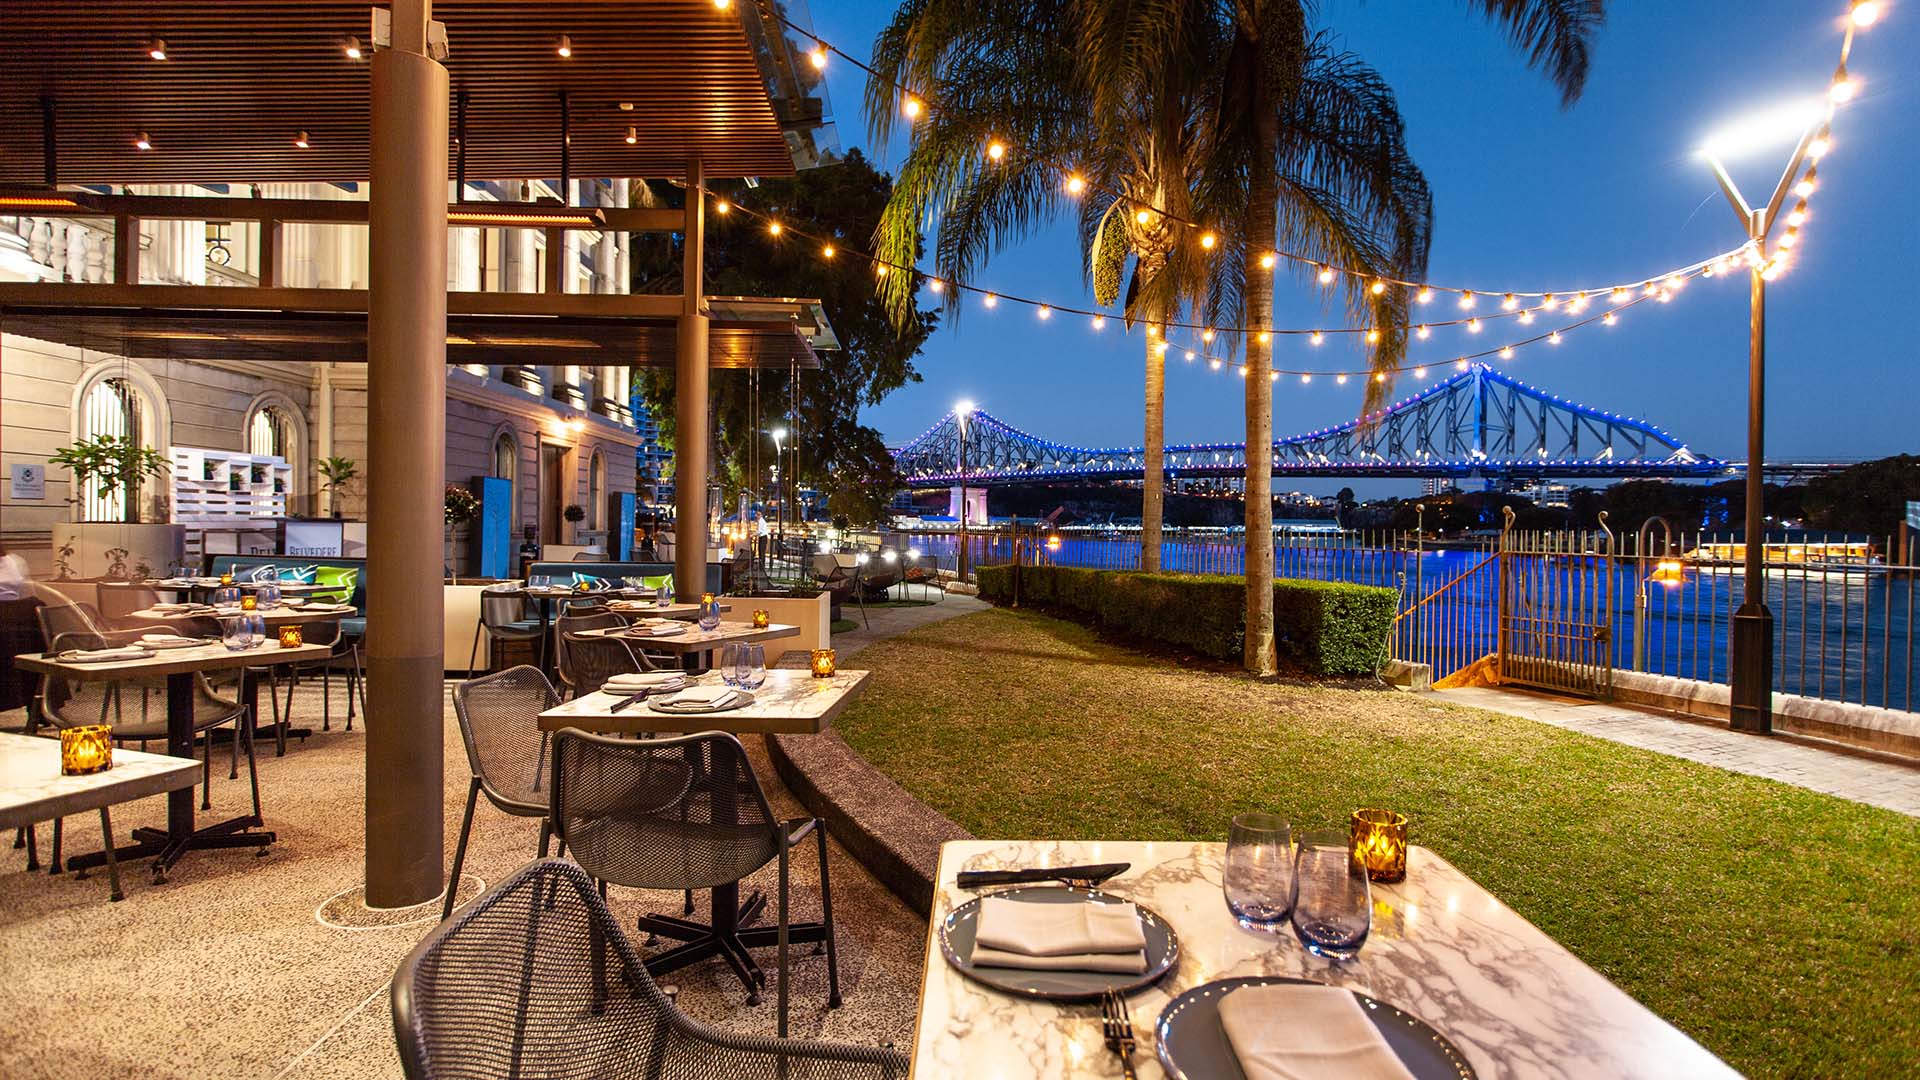 Brisbane Cbd Restaurants With Private Dining Room